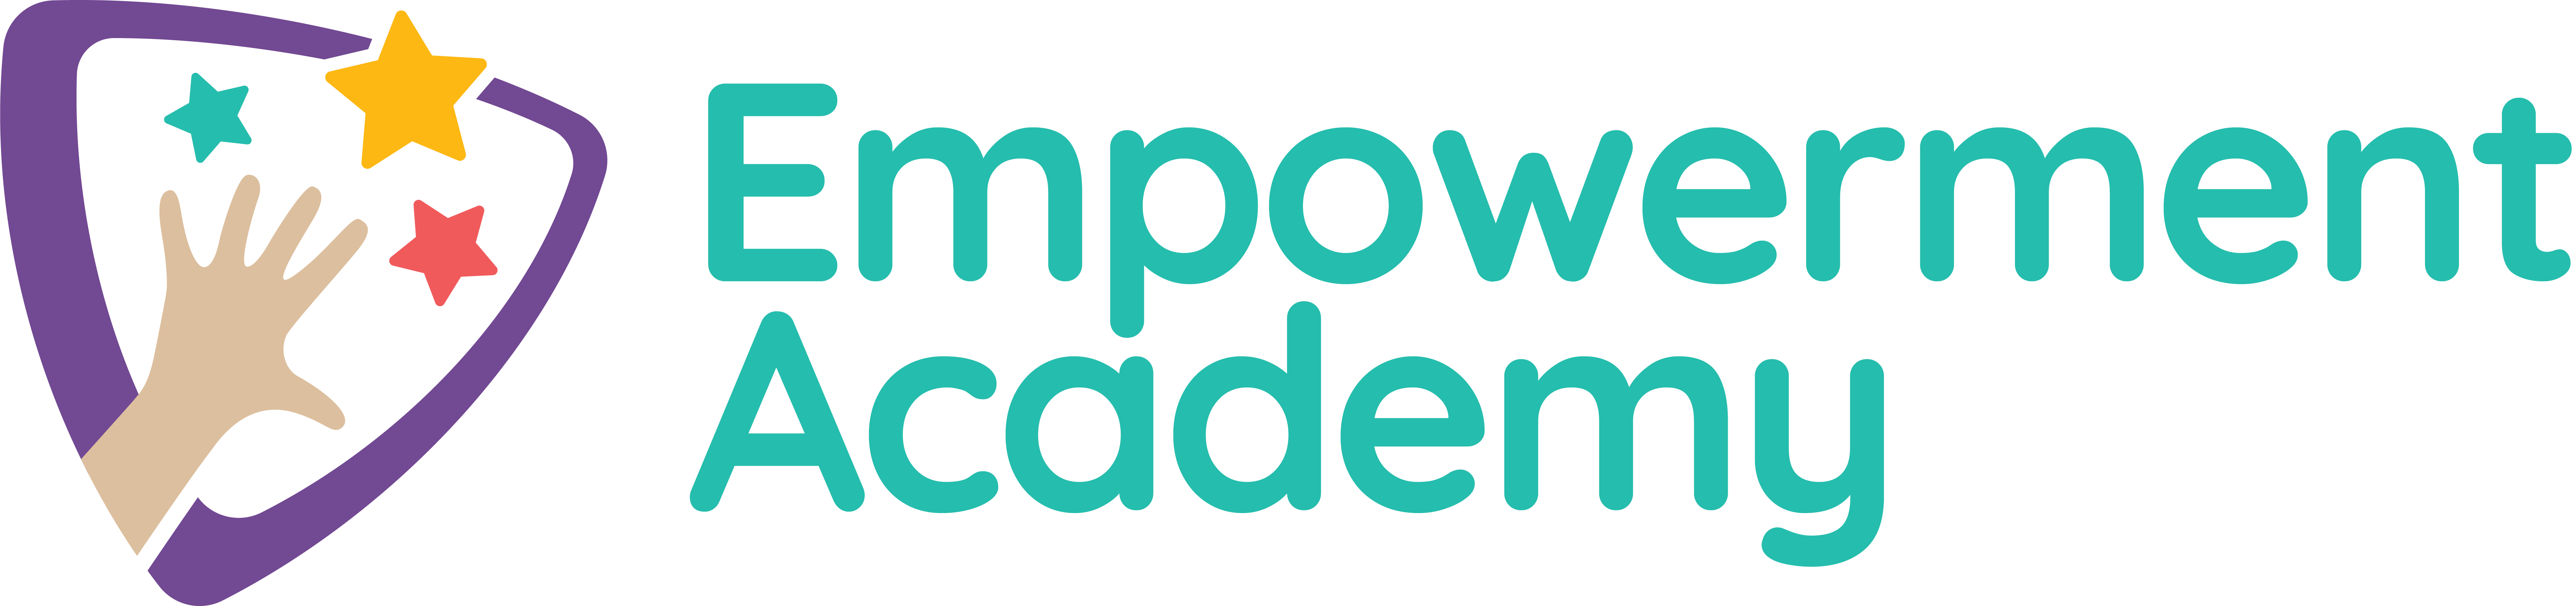 Empowerment Academy logo